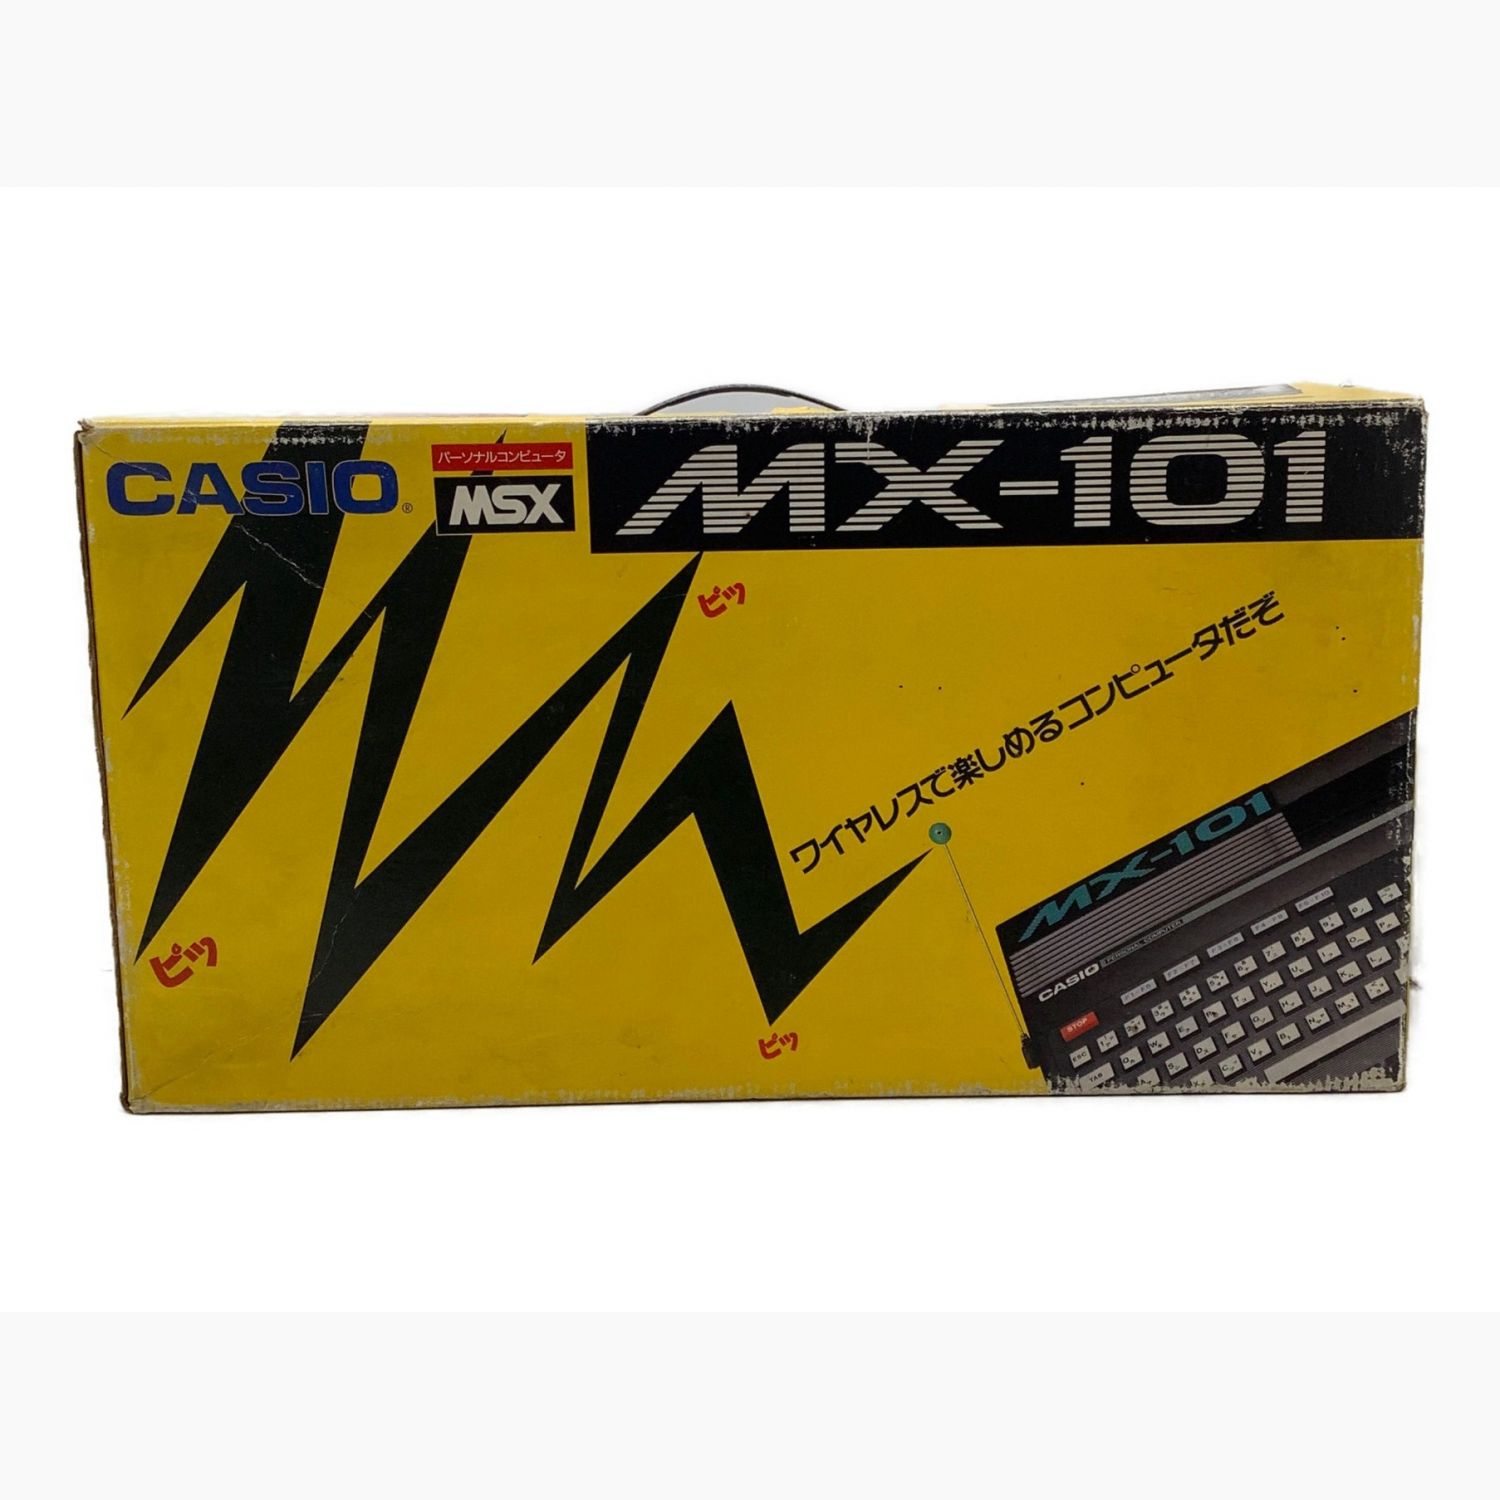 CASIO カシオ MSX MX-101 CASIO カセット付